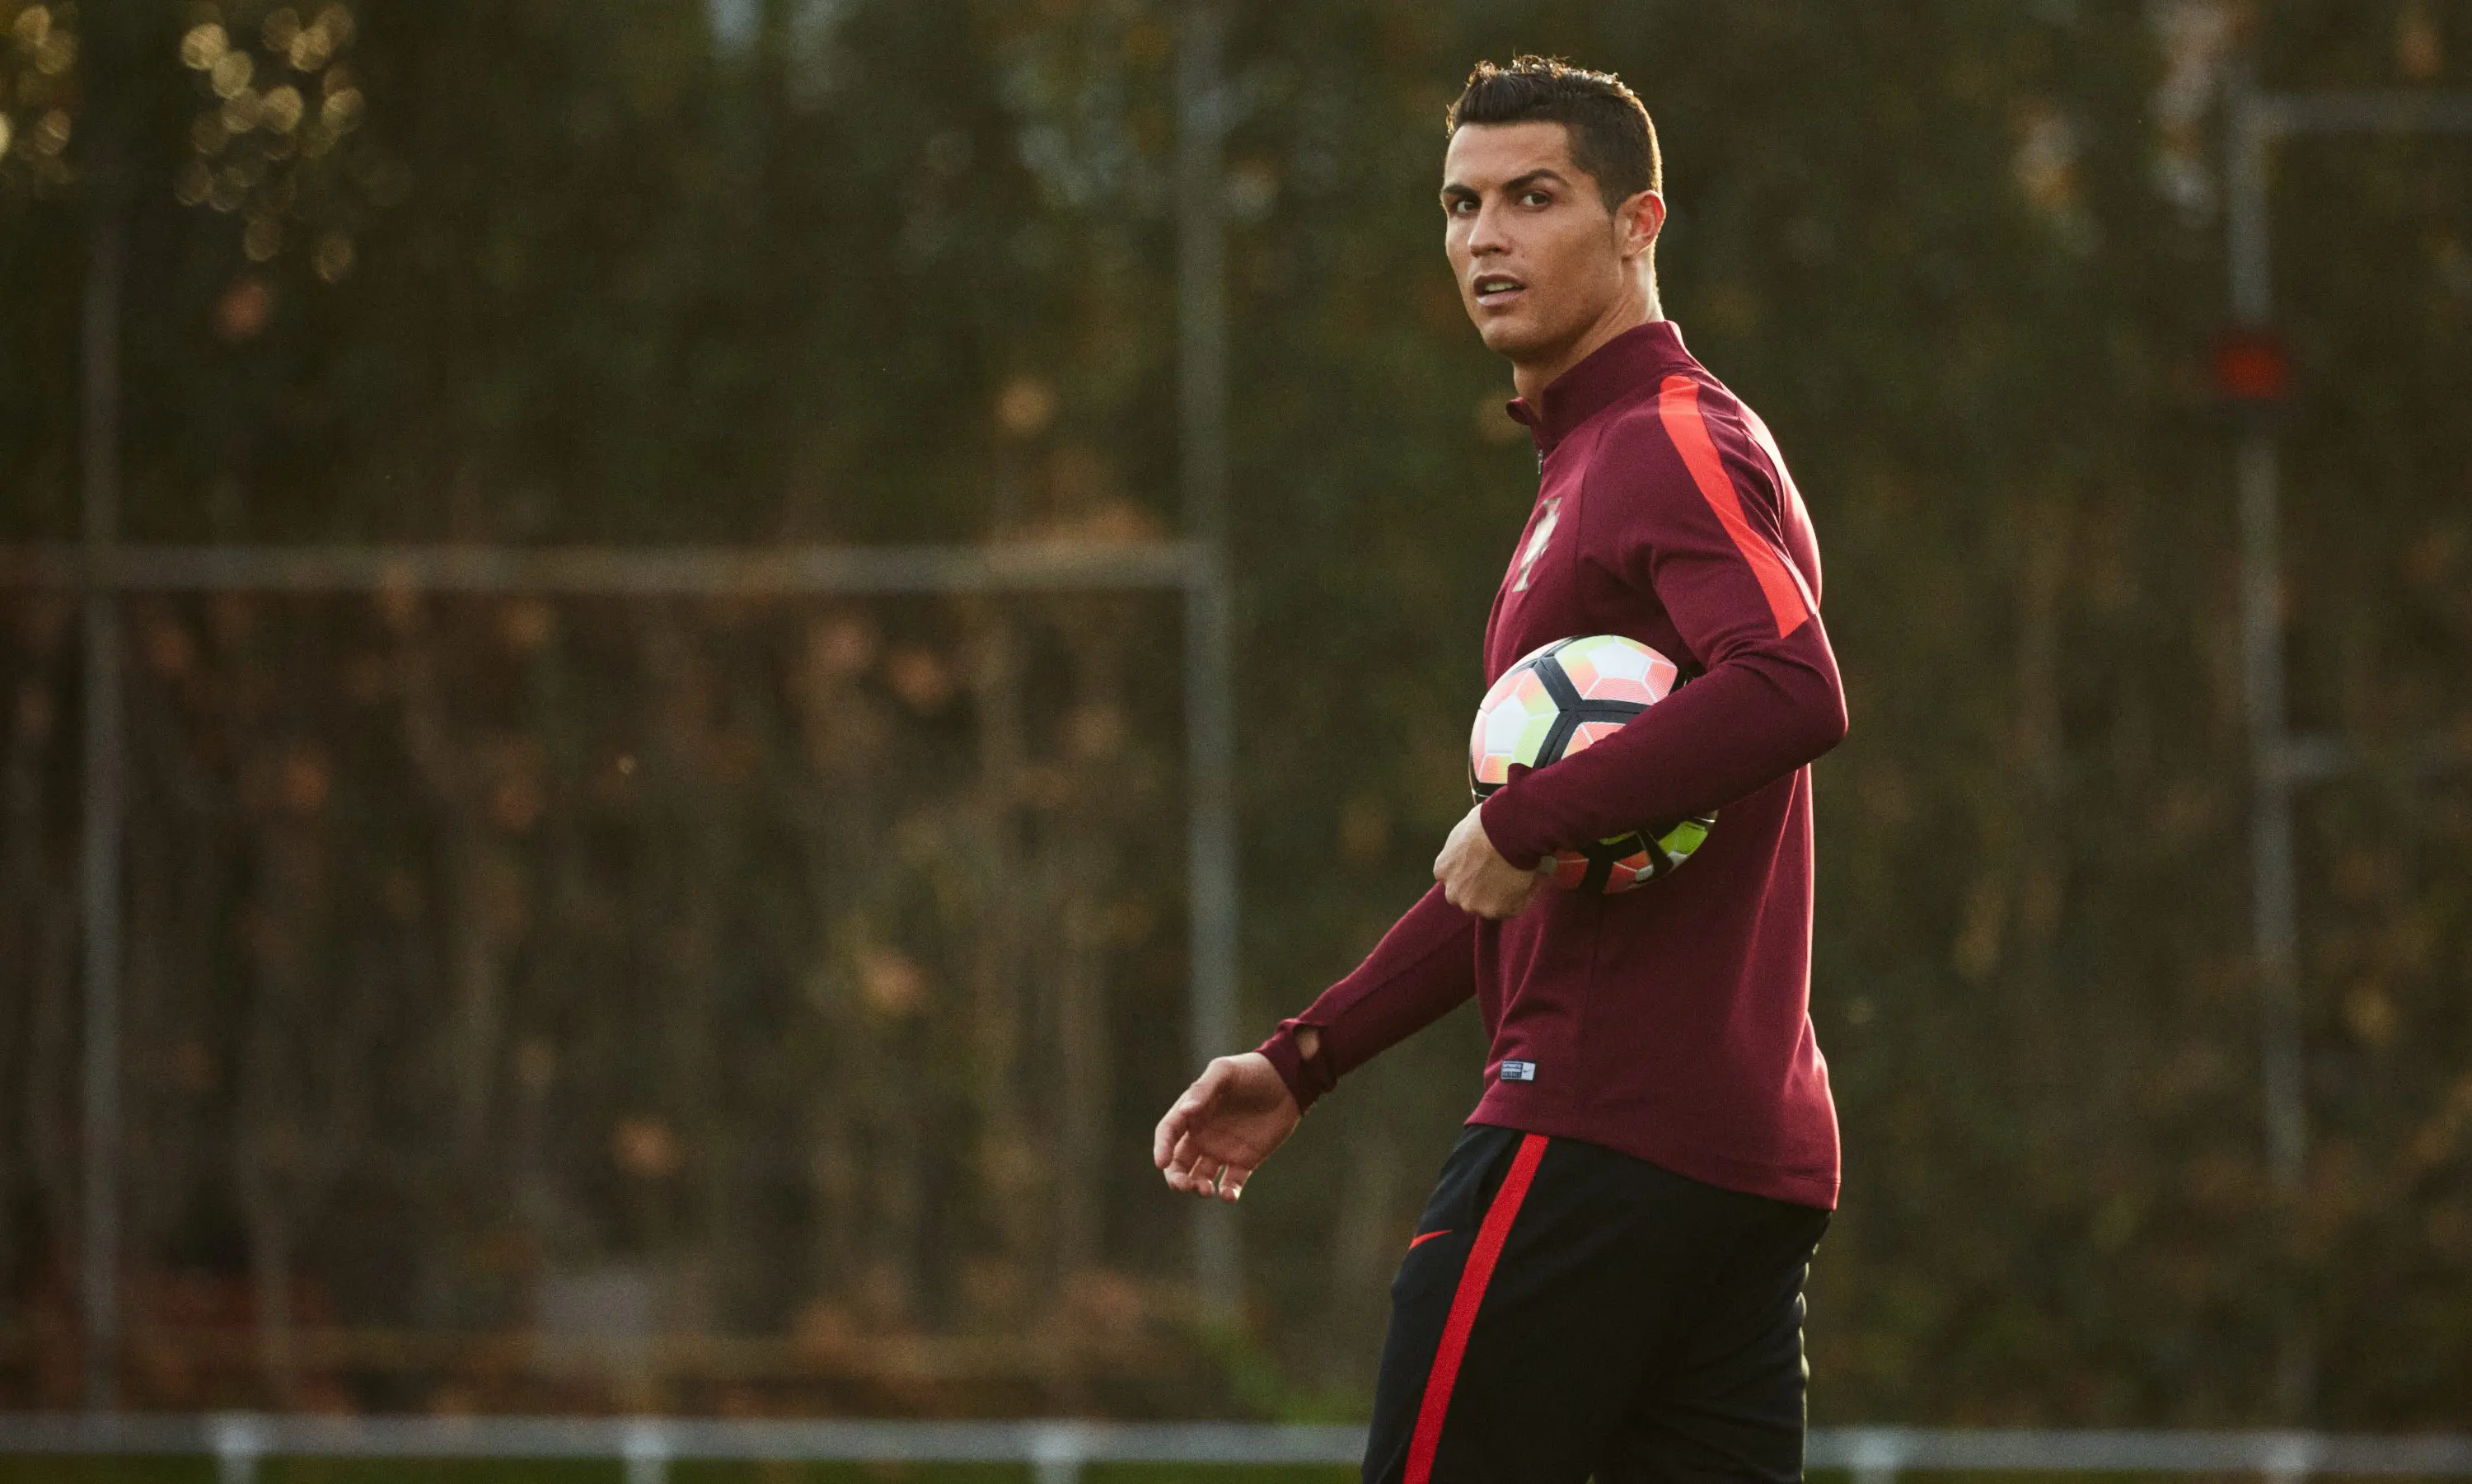 Nike Football “The Switch” feat. Cristiano Ronaldo - Ape to Gentleman